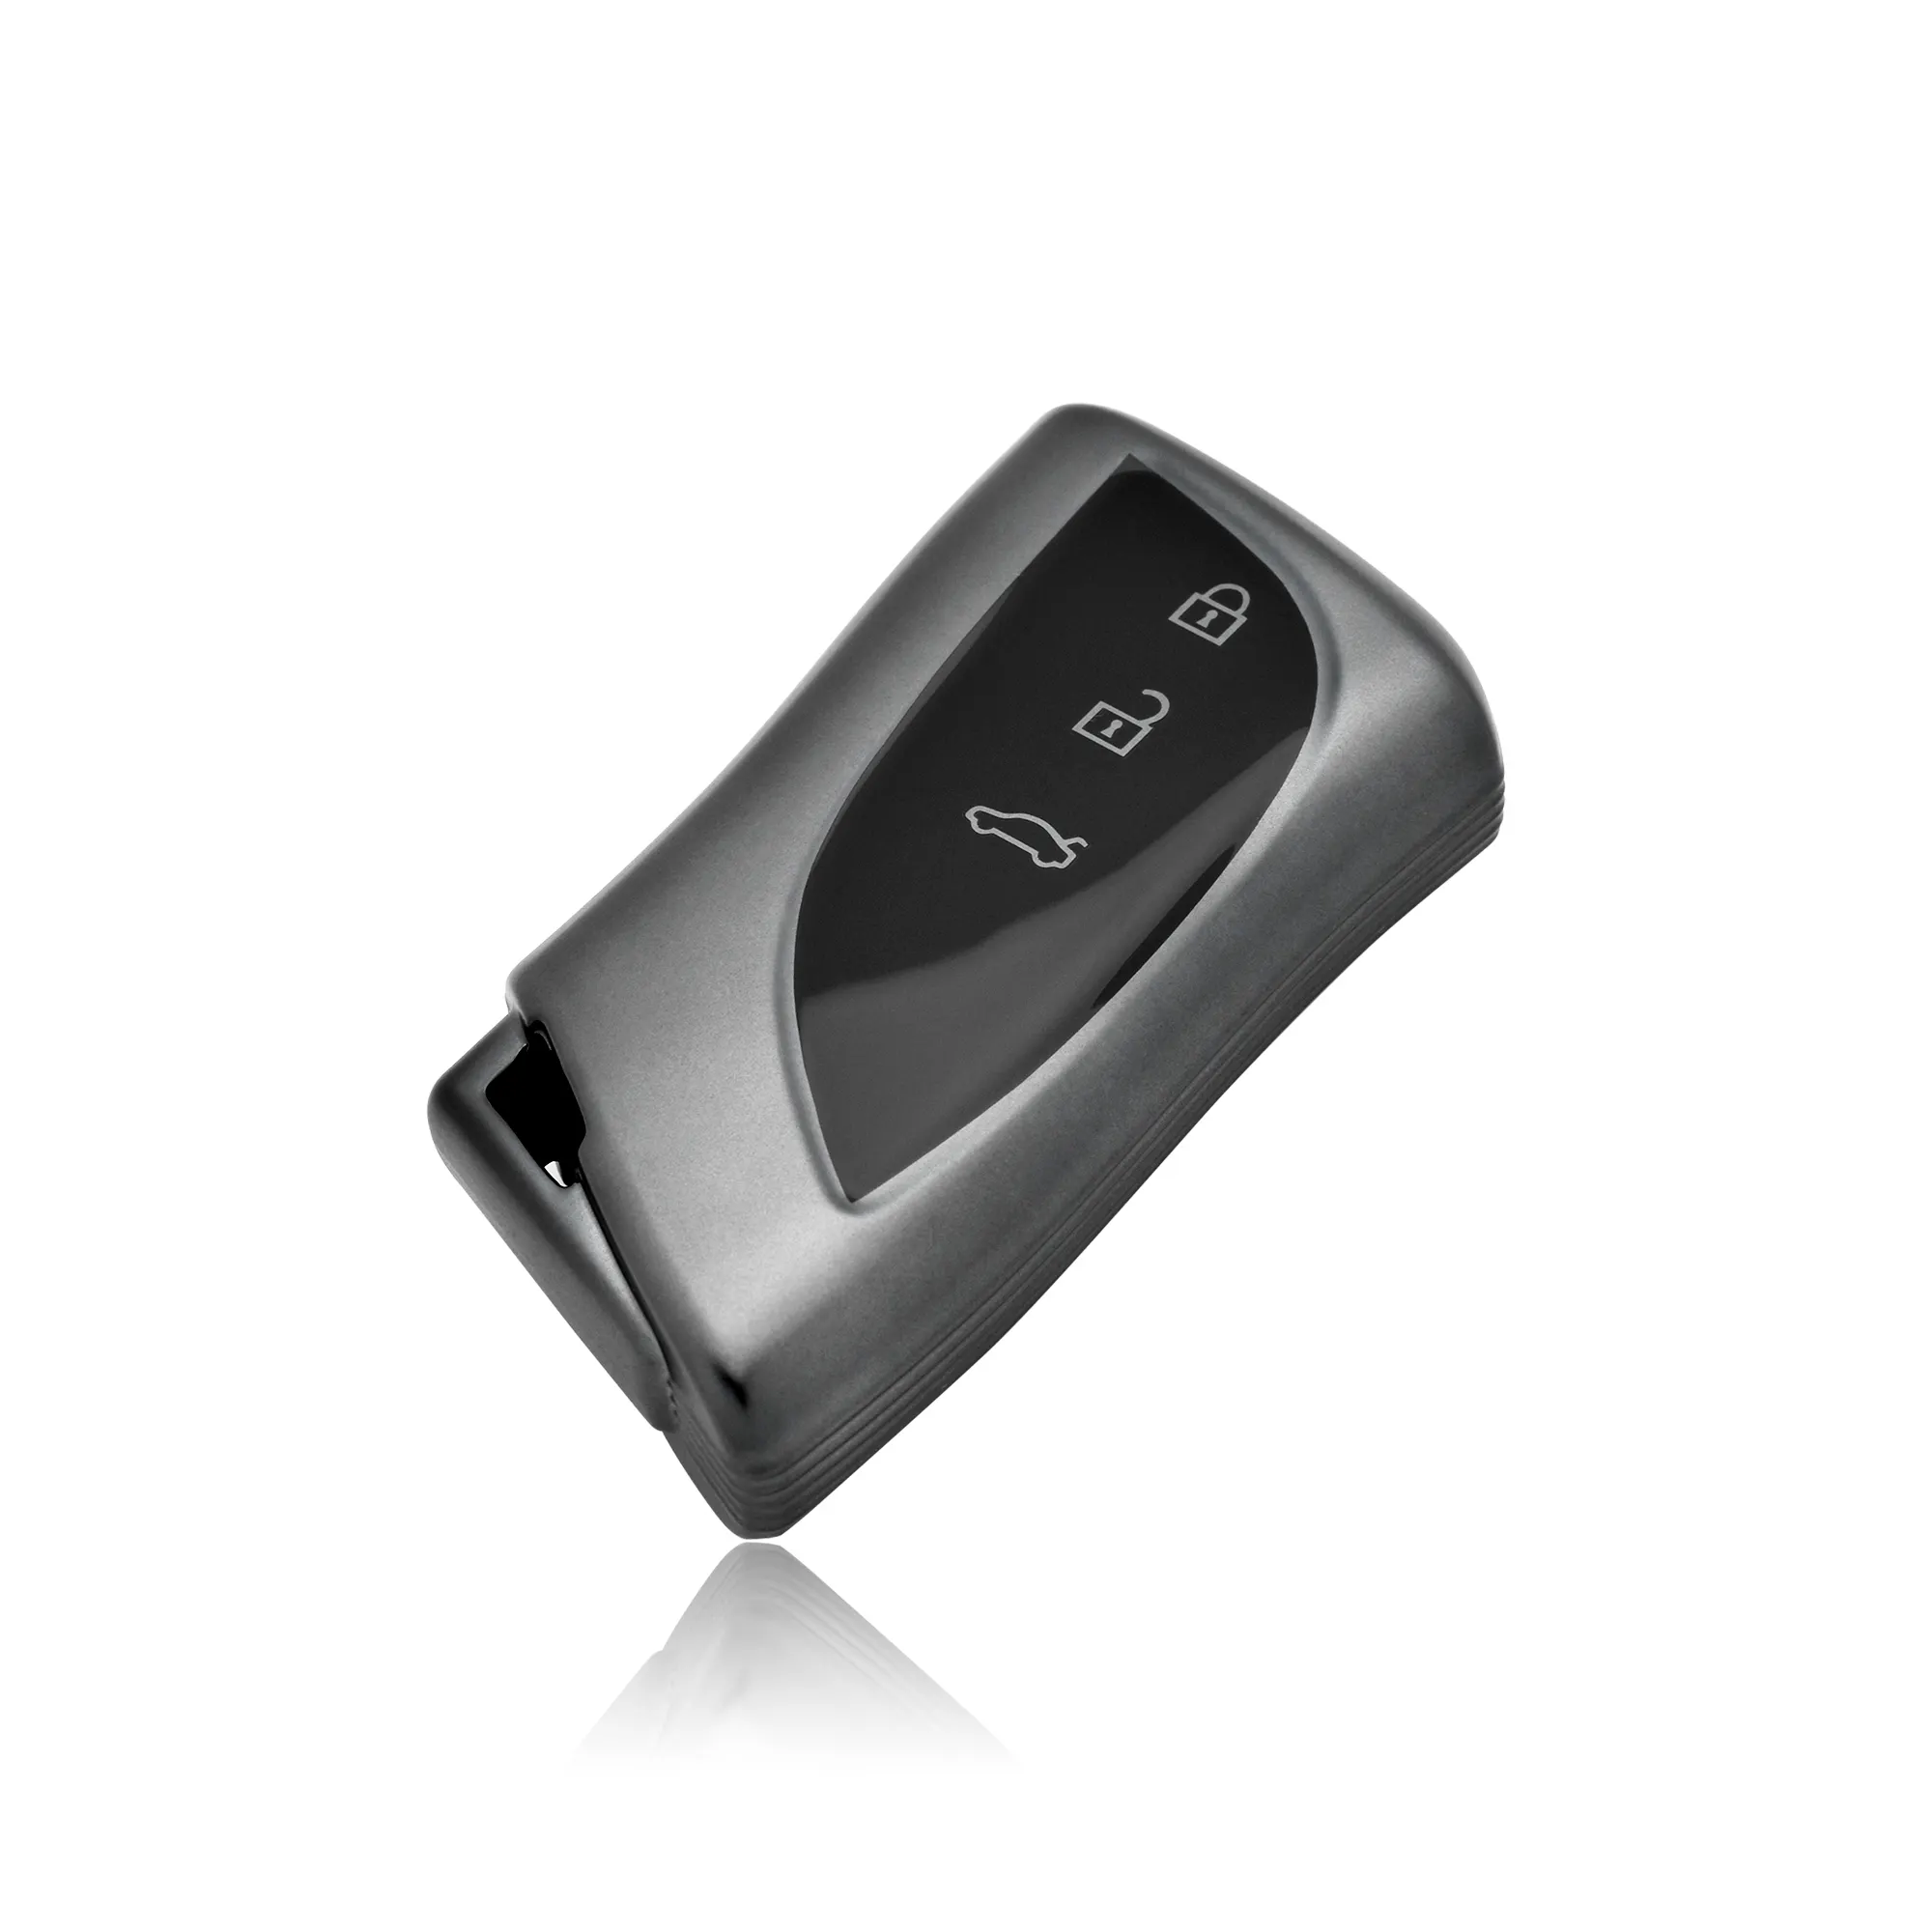 ऑटोमोटिव एक्सेसरीज tpu मैट कार कुंजी फोब कवर सॉफ्ट कुंजी बैग कवर लेक्सस के लिए फिट